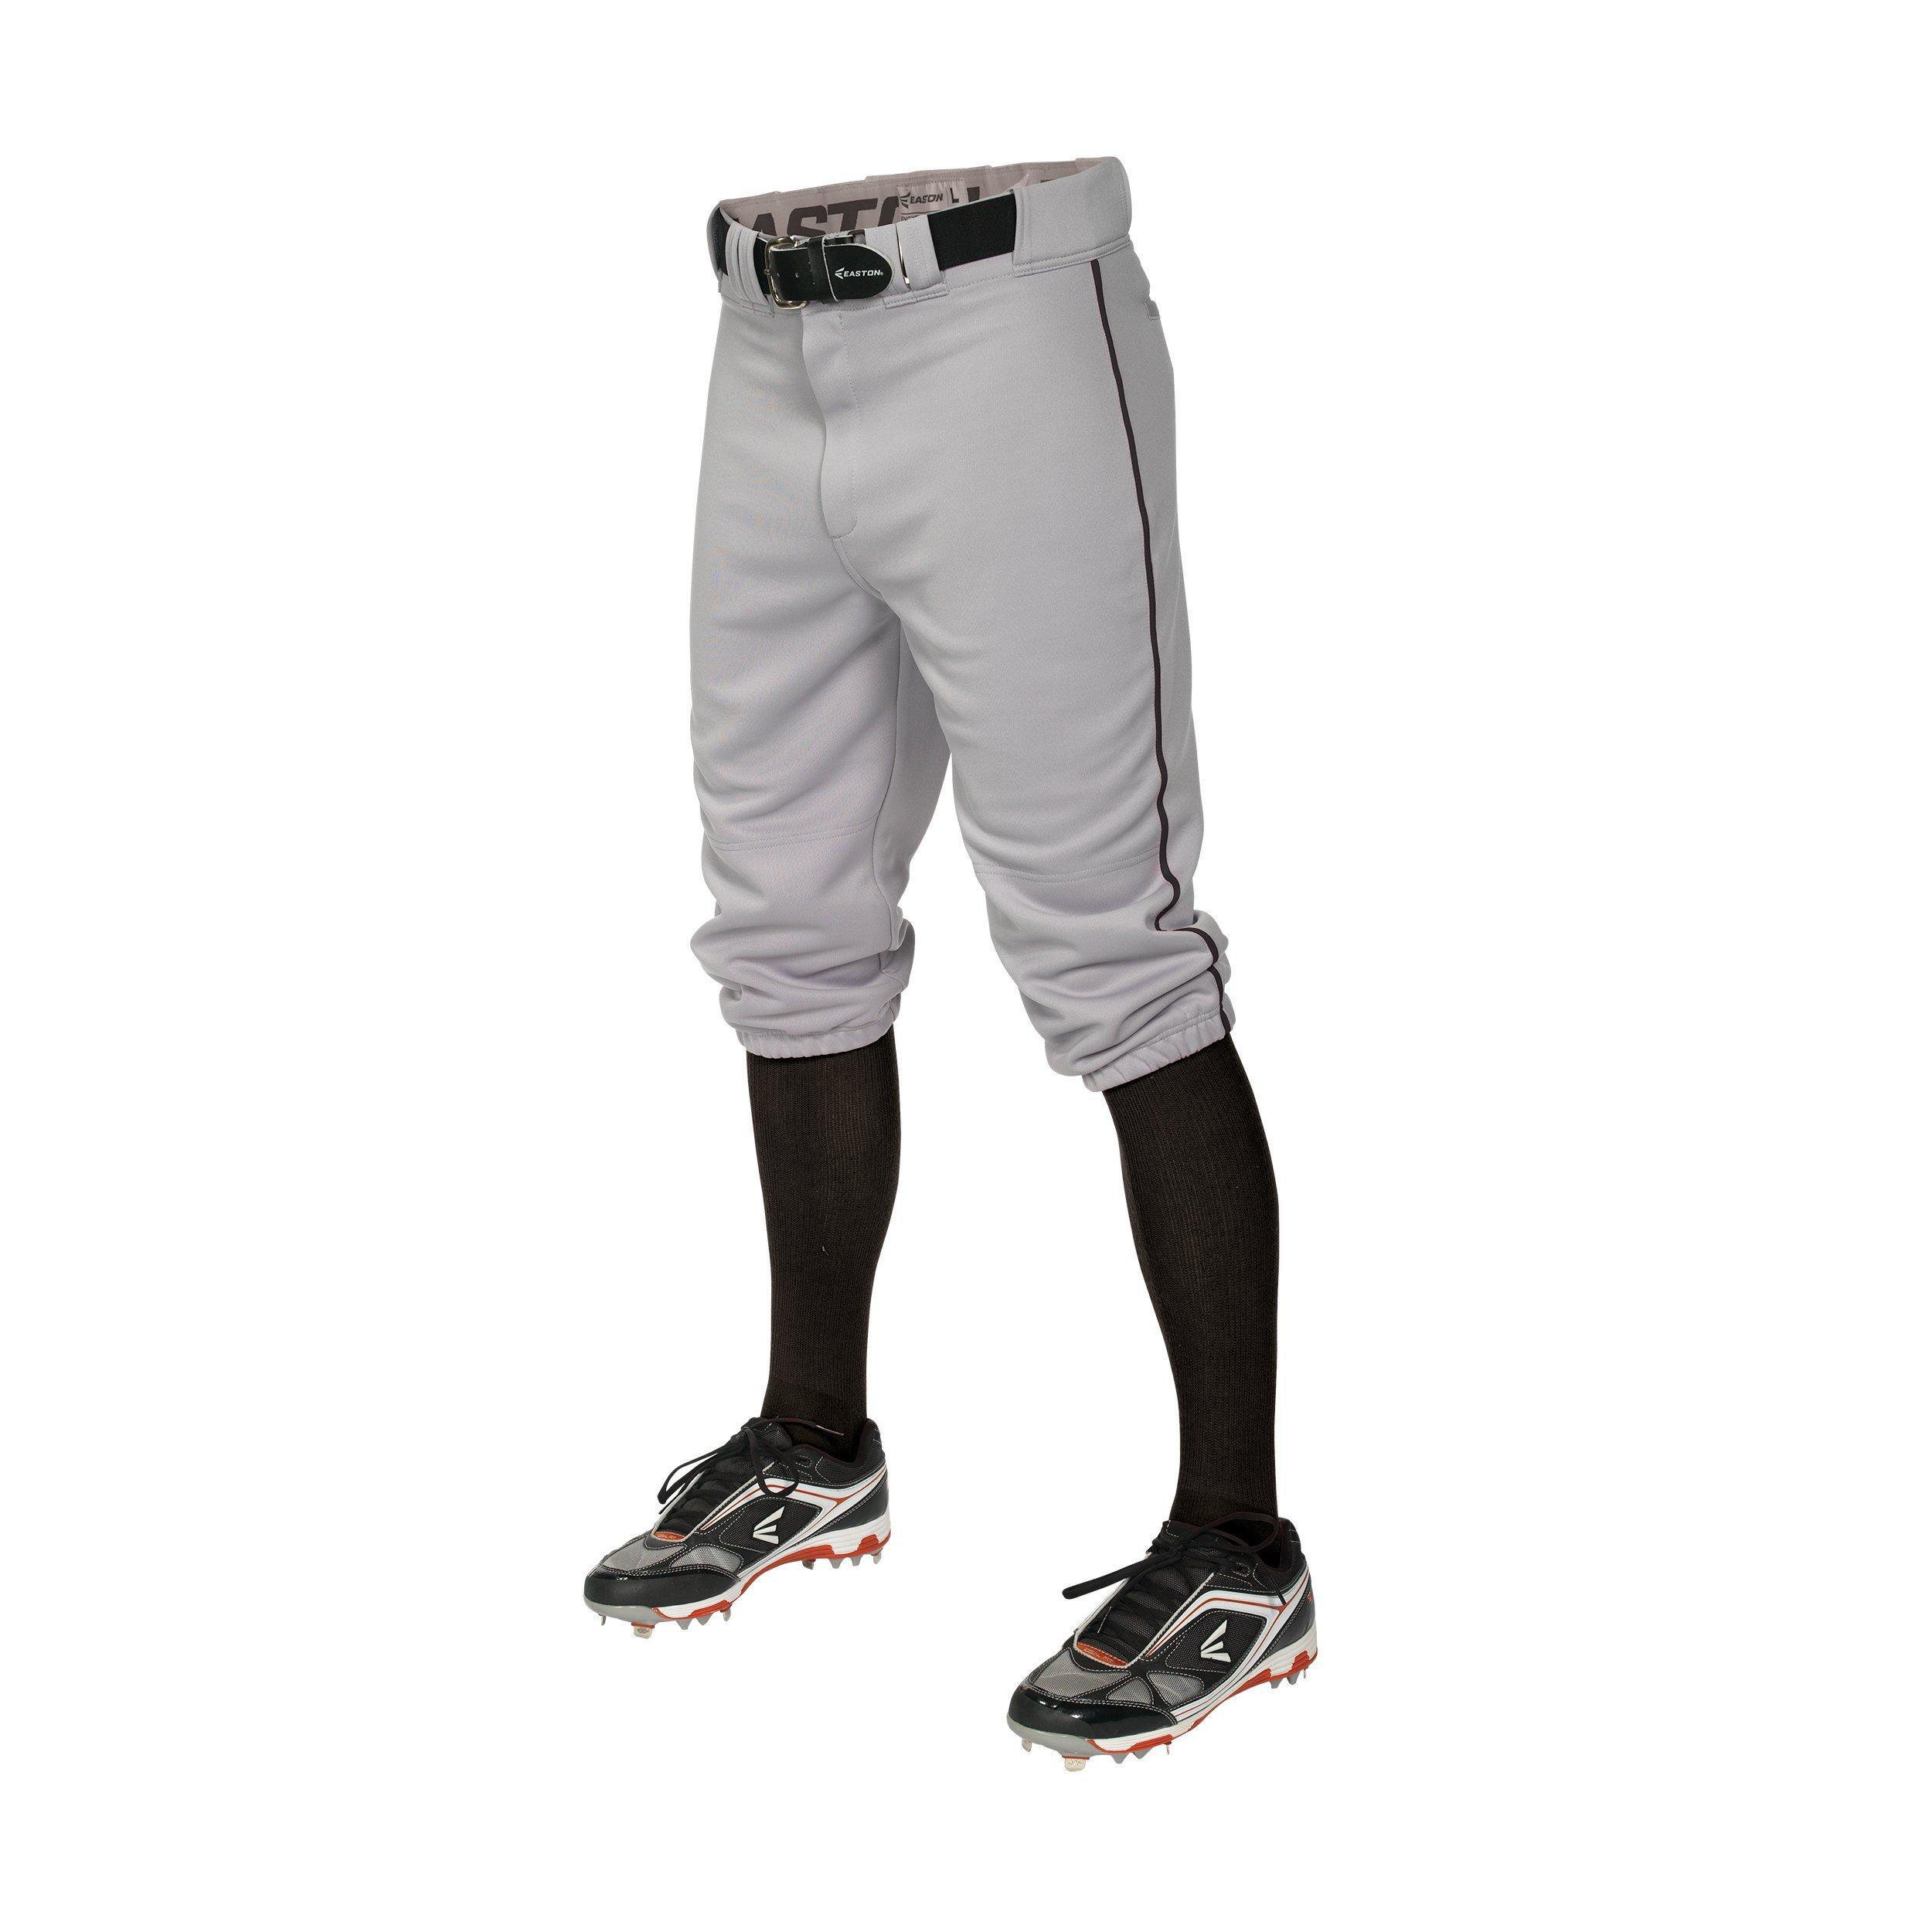 nike white baseball pants with black piping